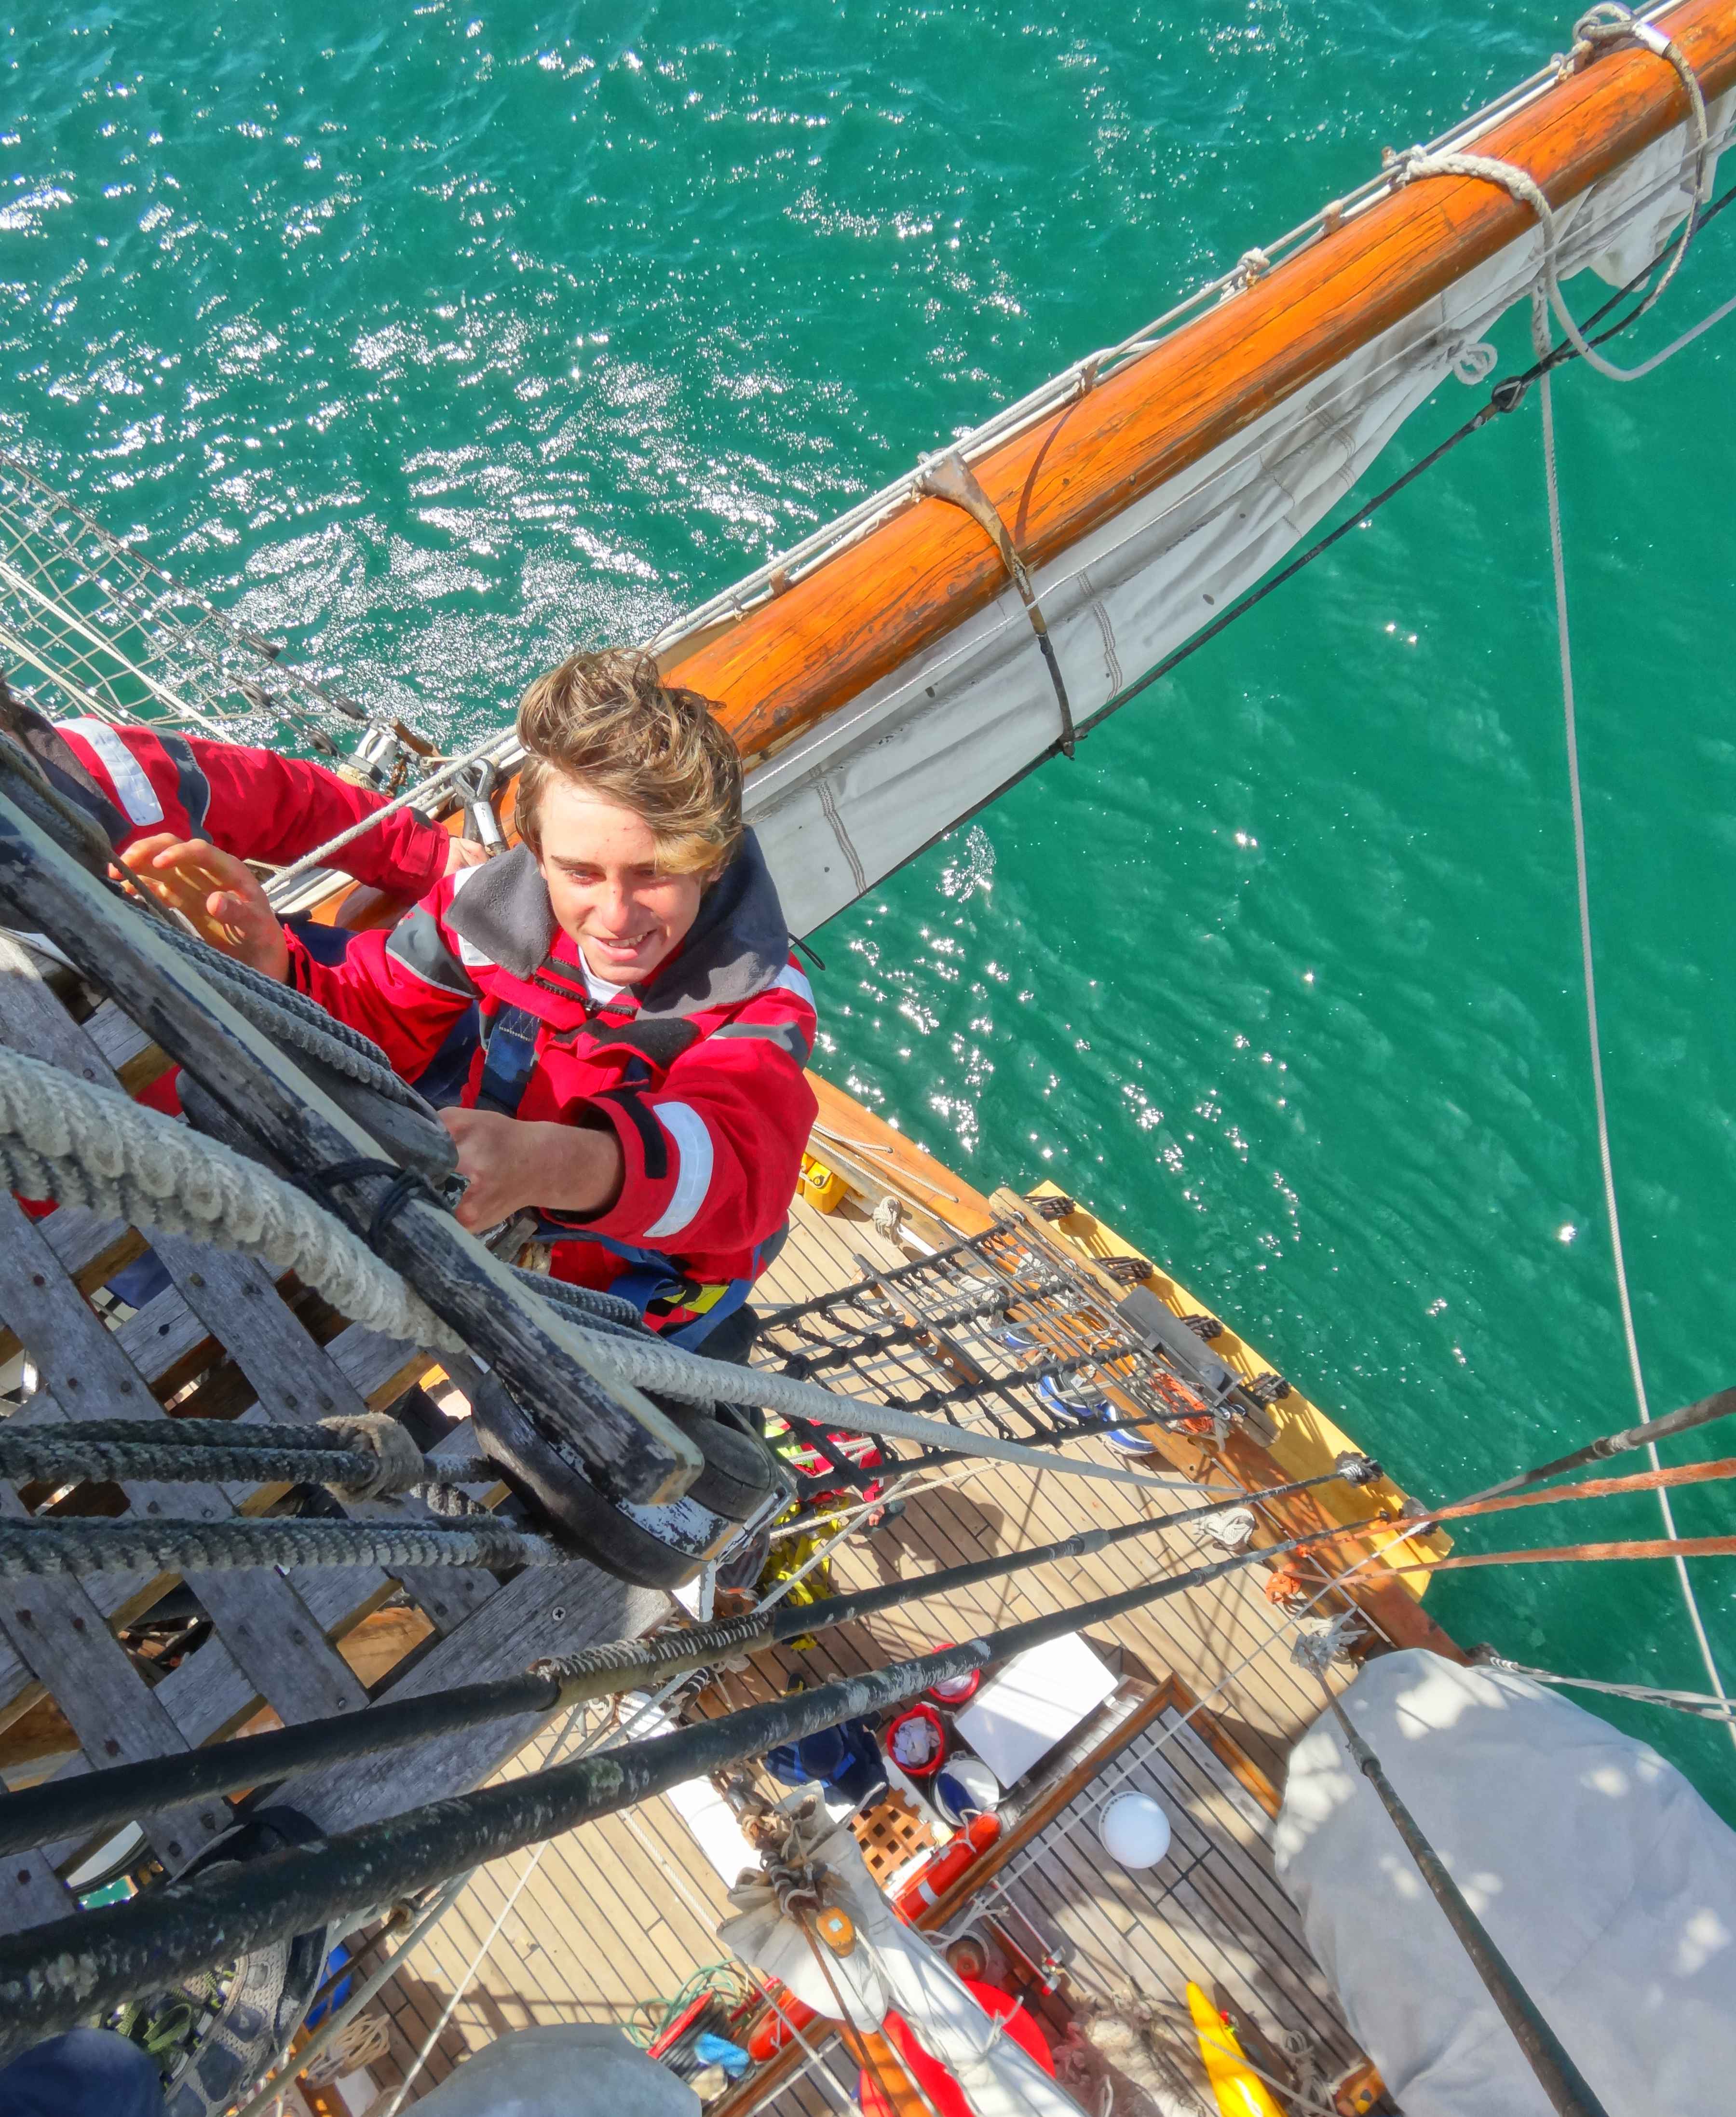 Sean Oosthuizen aboard the ‘Windeward Bound’ on the Power of 9 Port Davey Challenge, 2013.